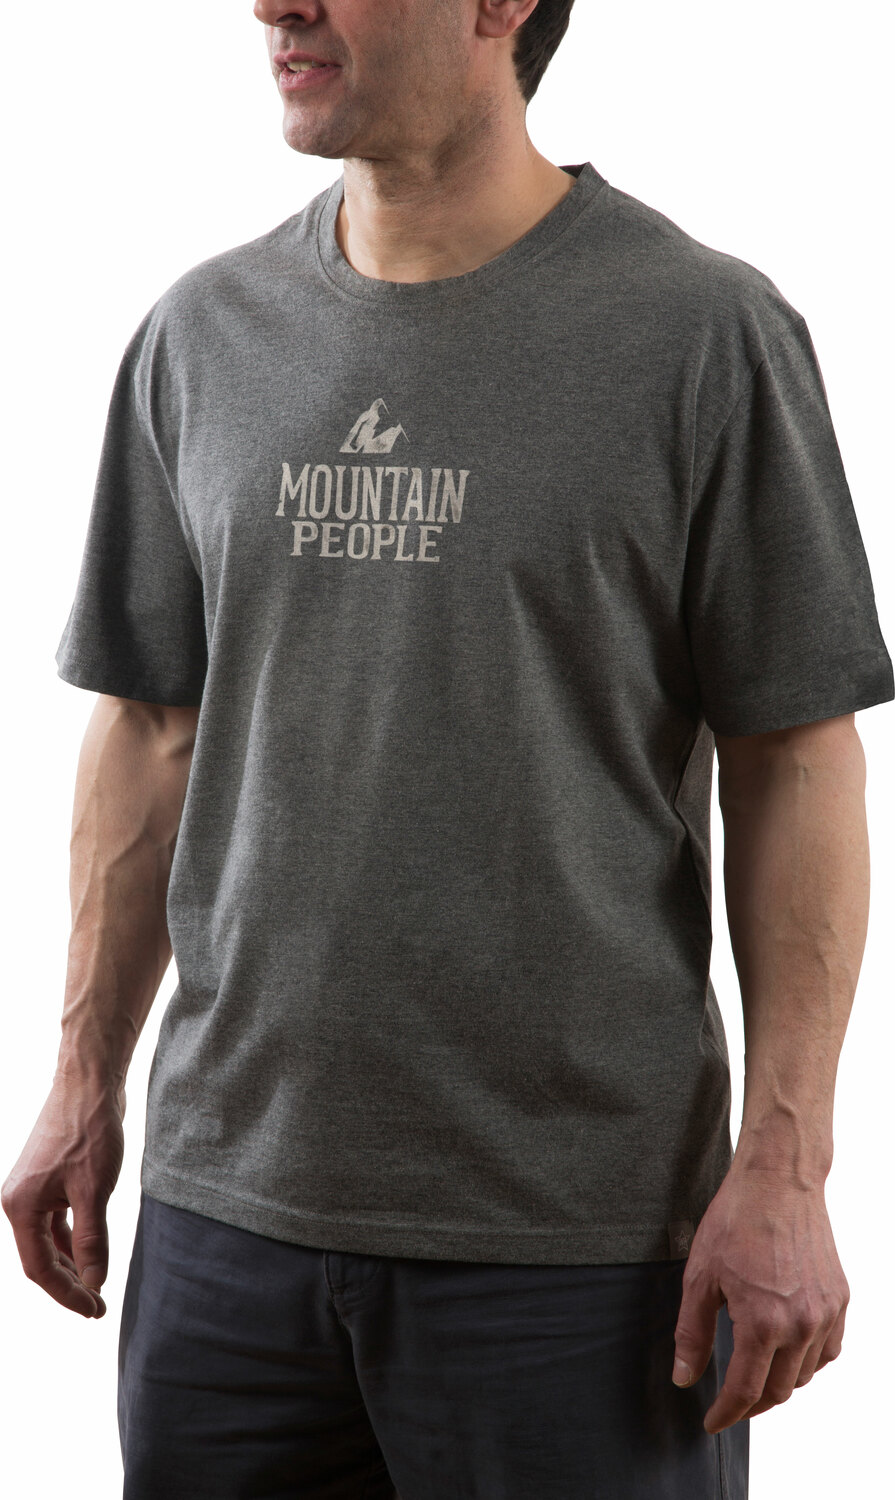 Mountain People by We People - Mountain People - Small Gray Unisex T-Shirt